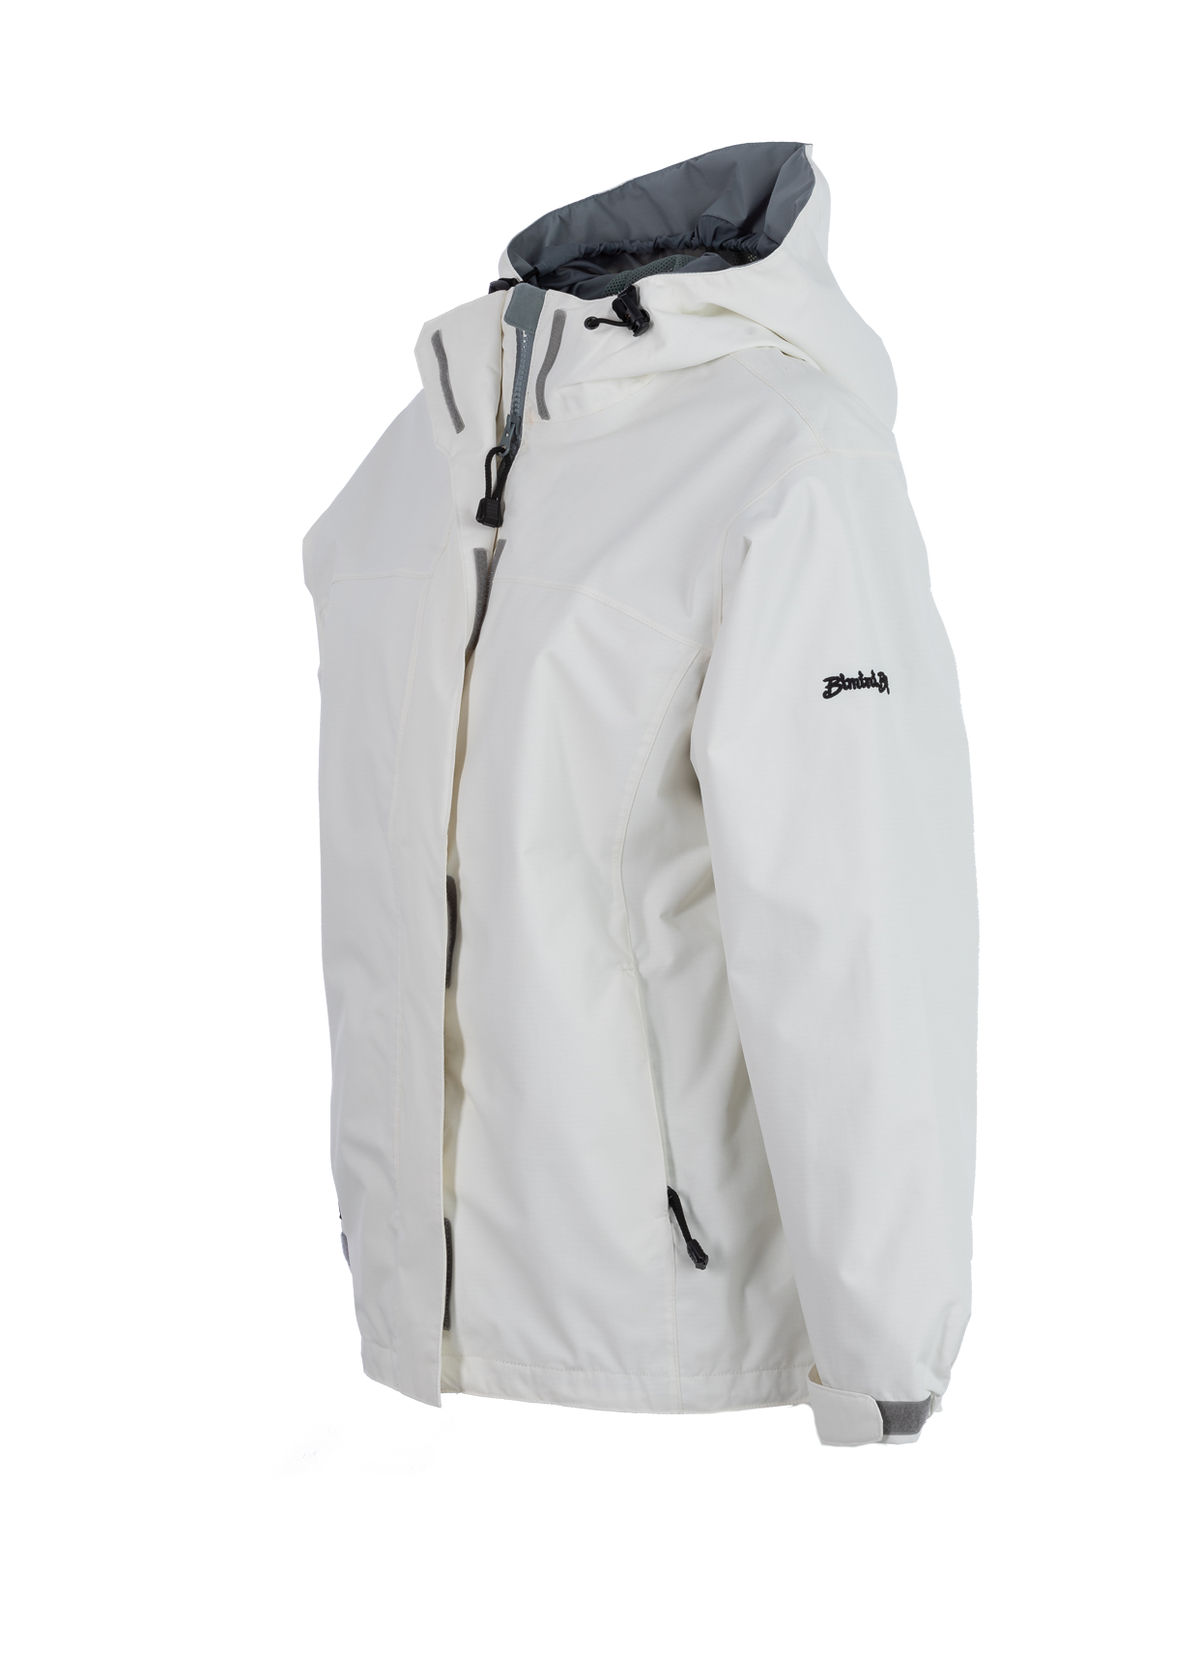 Bimini Bay Outfitters Boca Grande Women's Waterproof Breathable Jacket - image 5 of 6